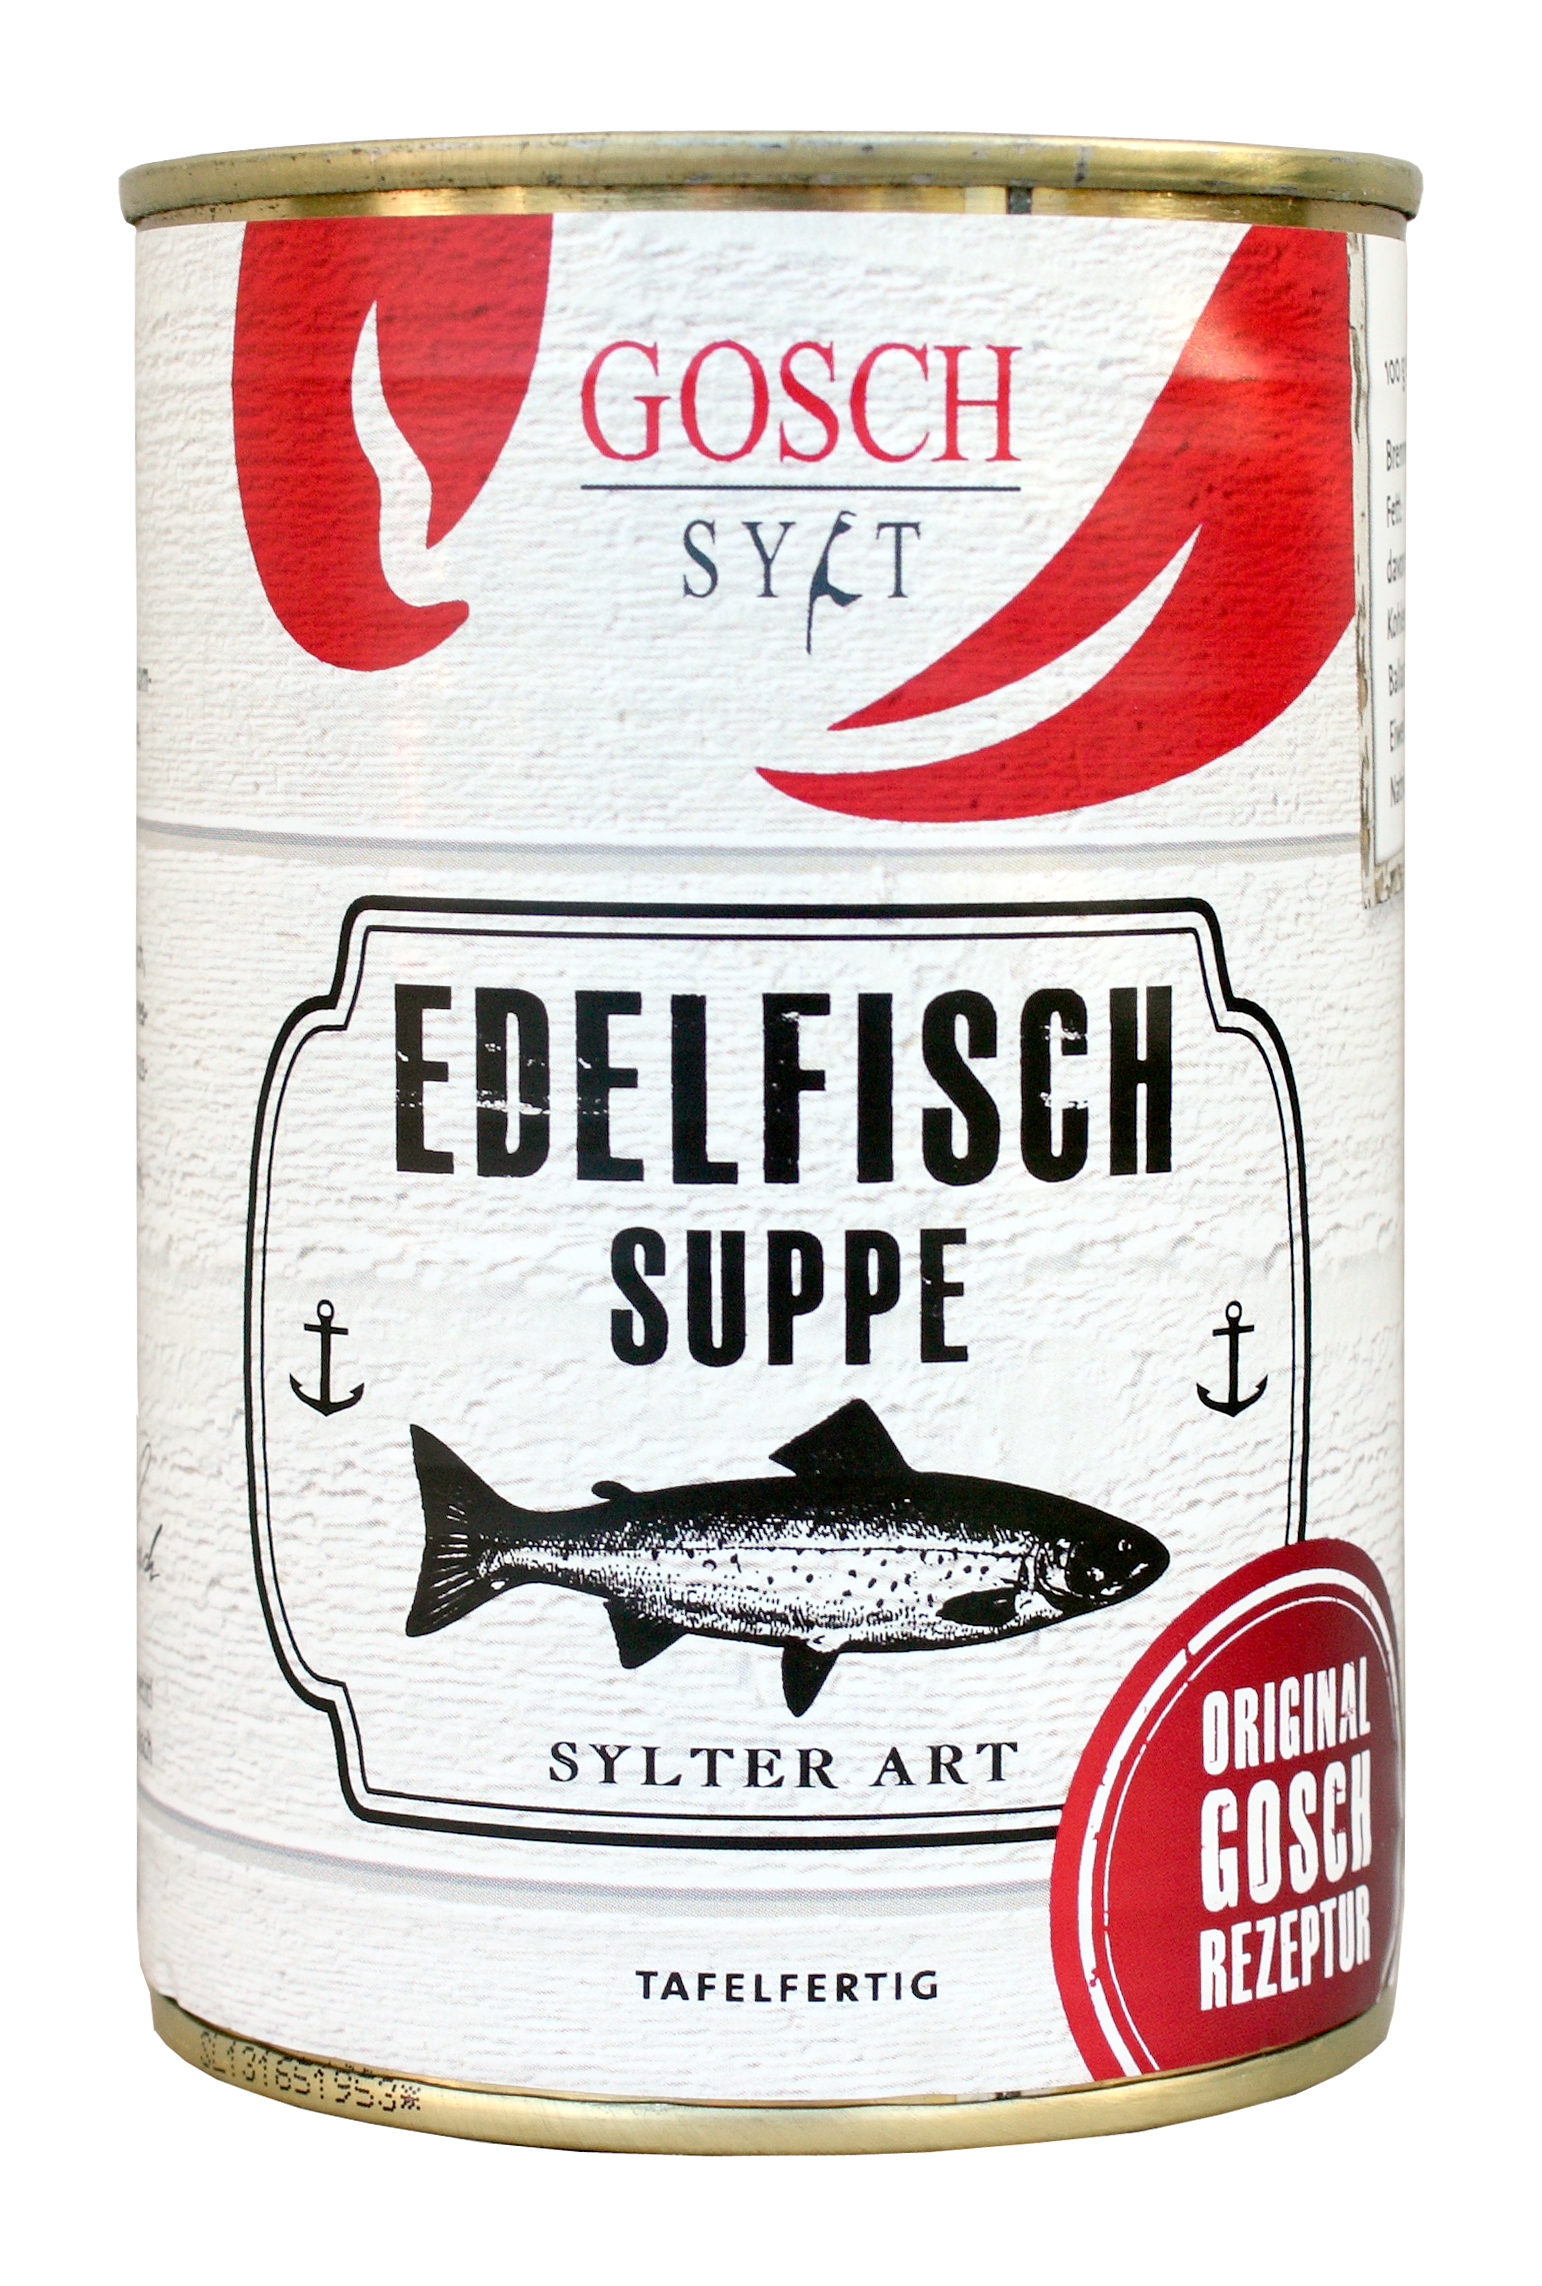 Edelfischsuppe, SYLTER ART,400 ml